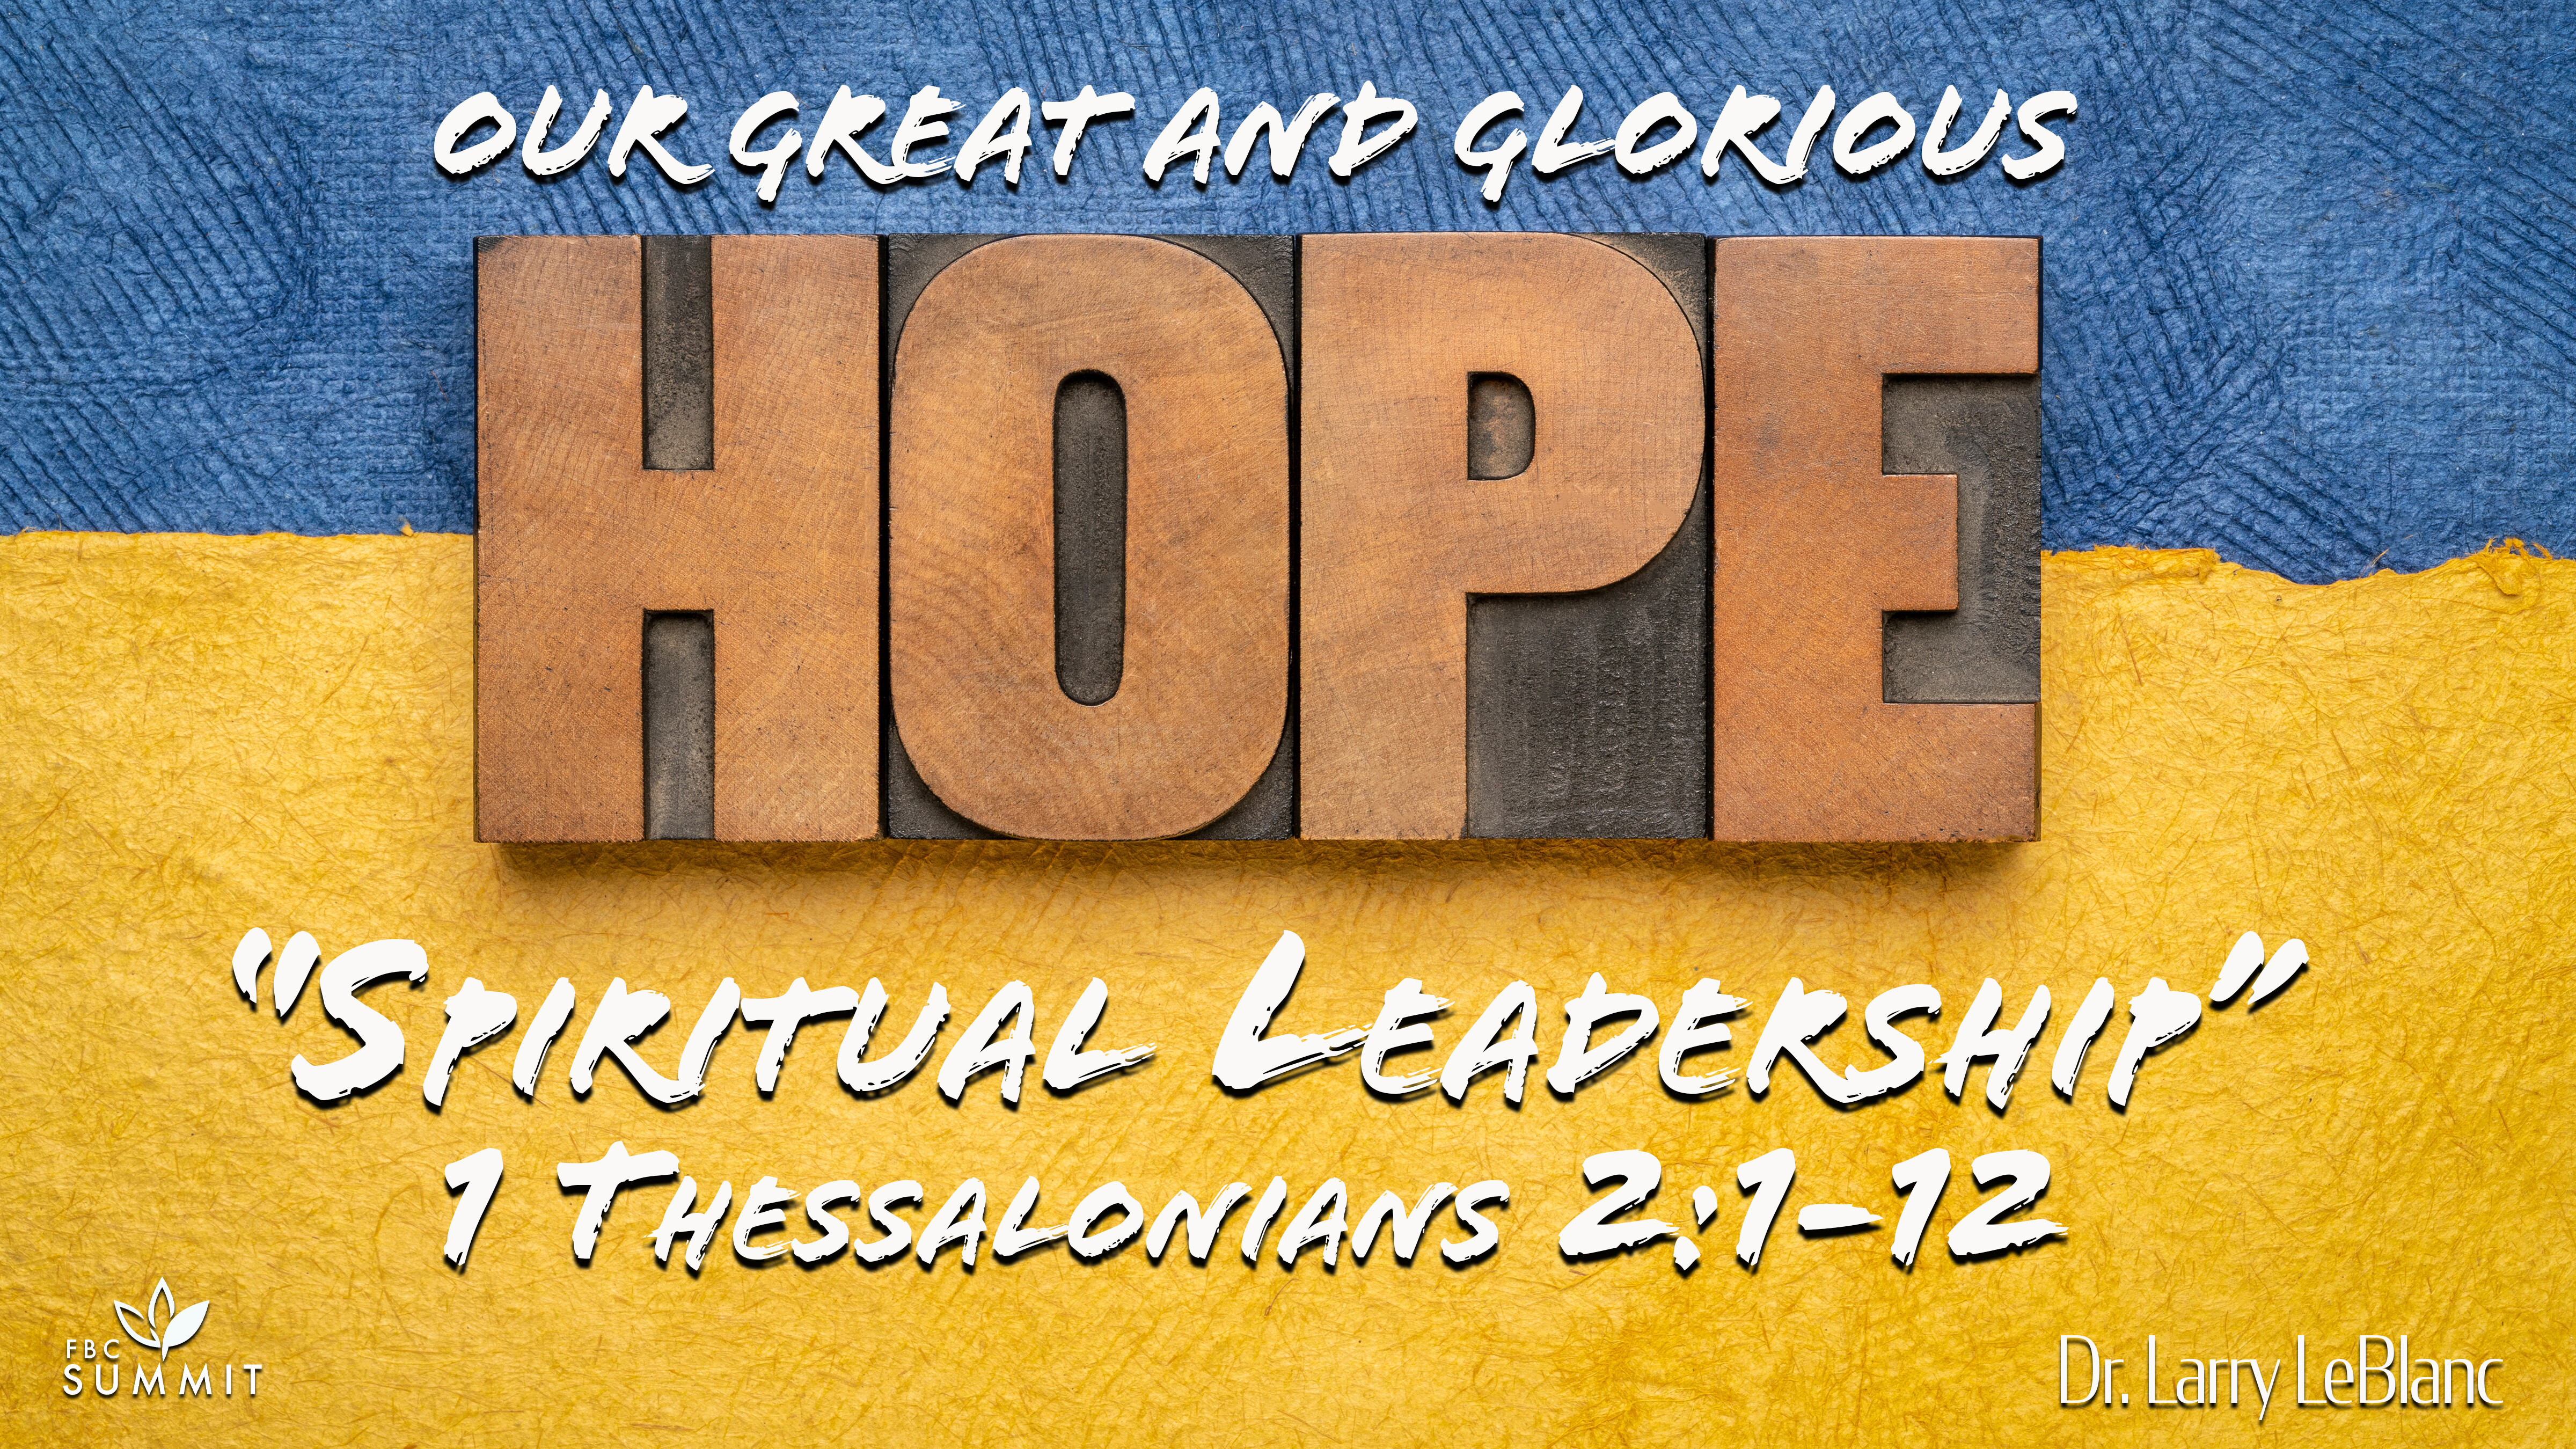 "Spiritual Leadership" 1 Thessalonians 2:1-12 // Dr. Larry LeBlanc